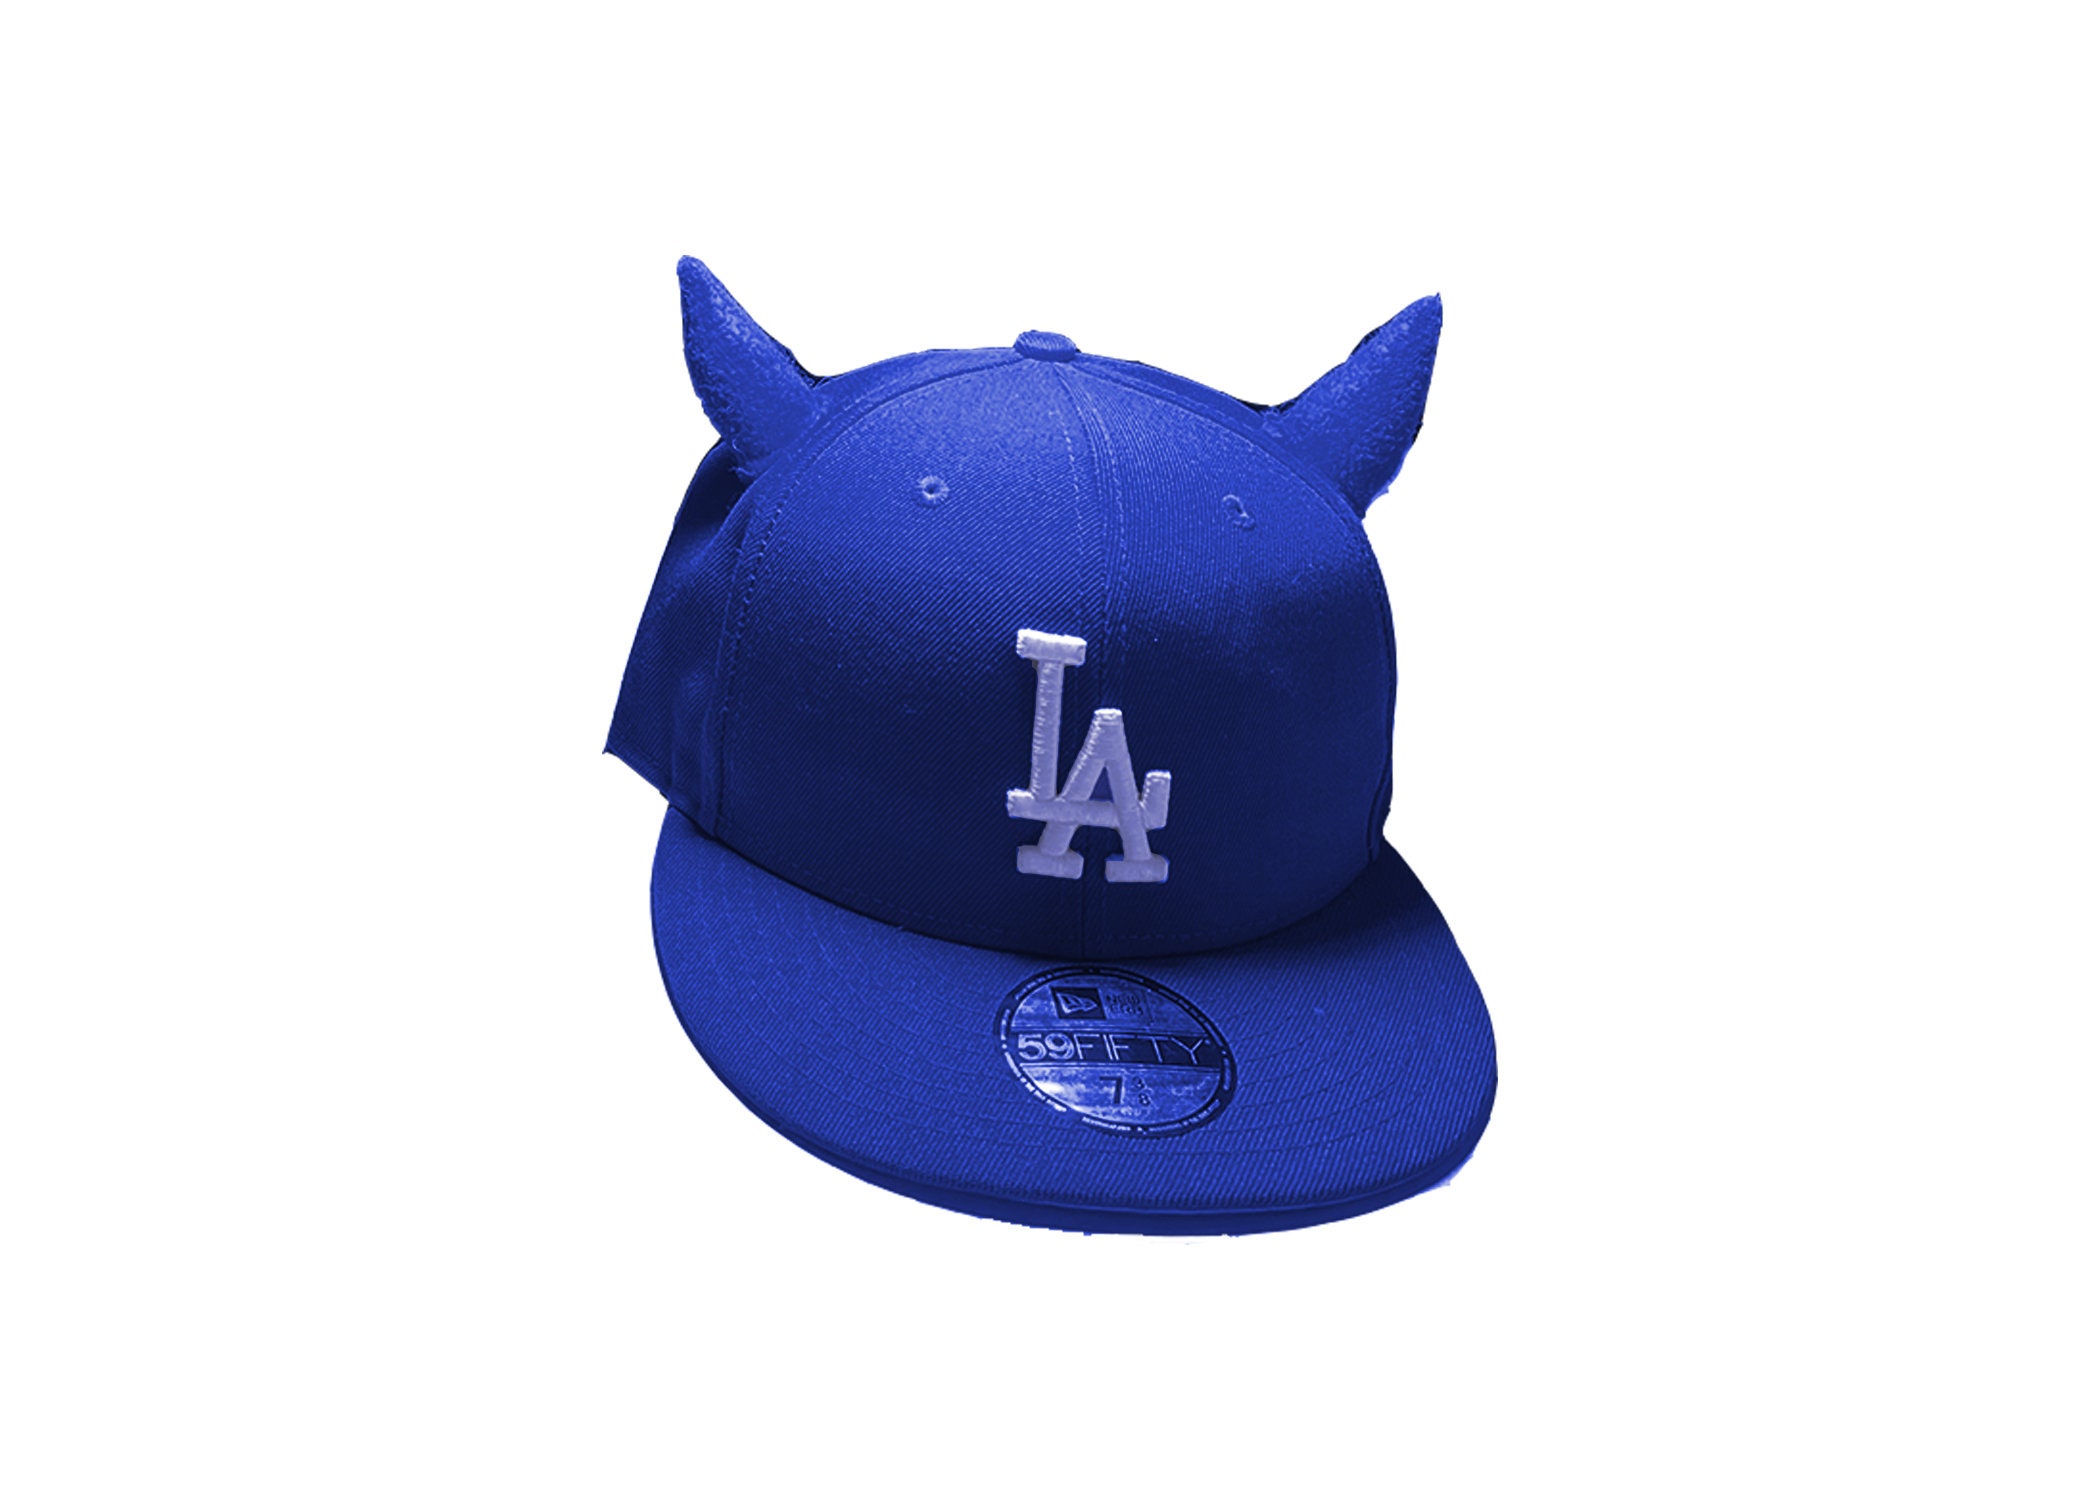 Vintage 90s Brooklyn Dodgers Hat 1938 Logo MLB Baseball Cap 